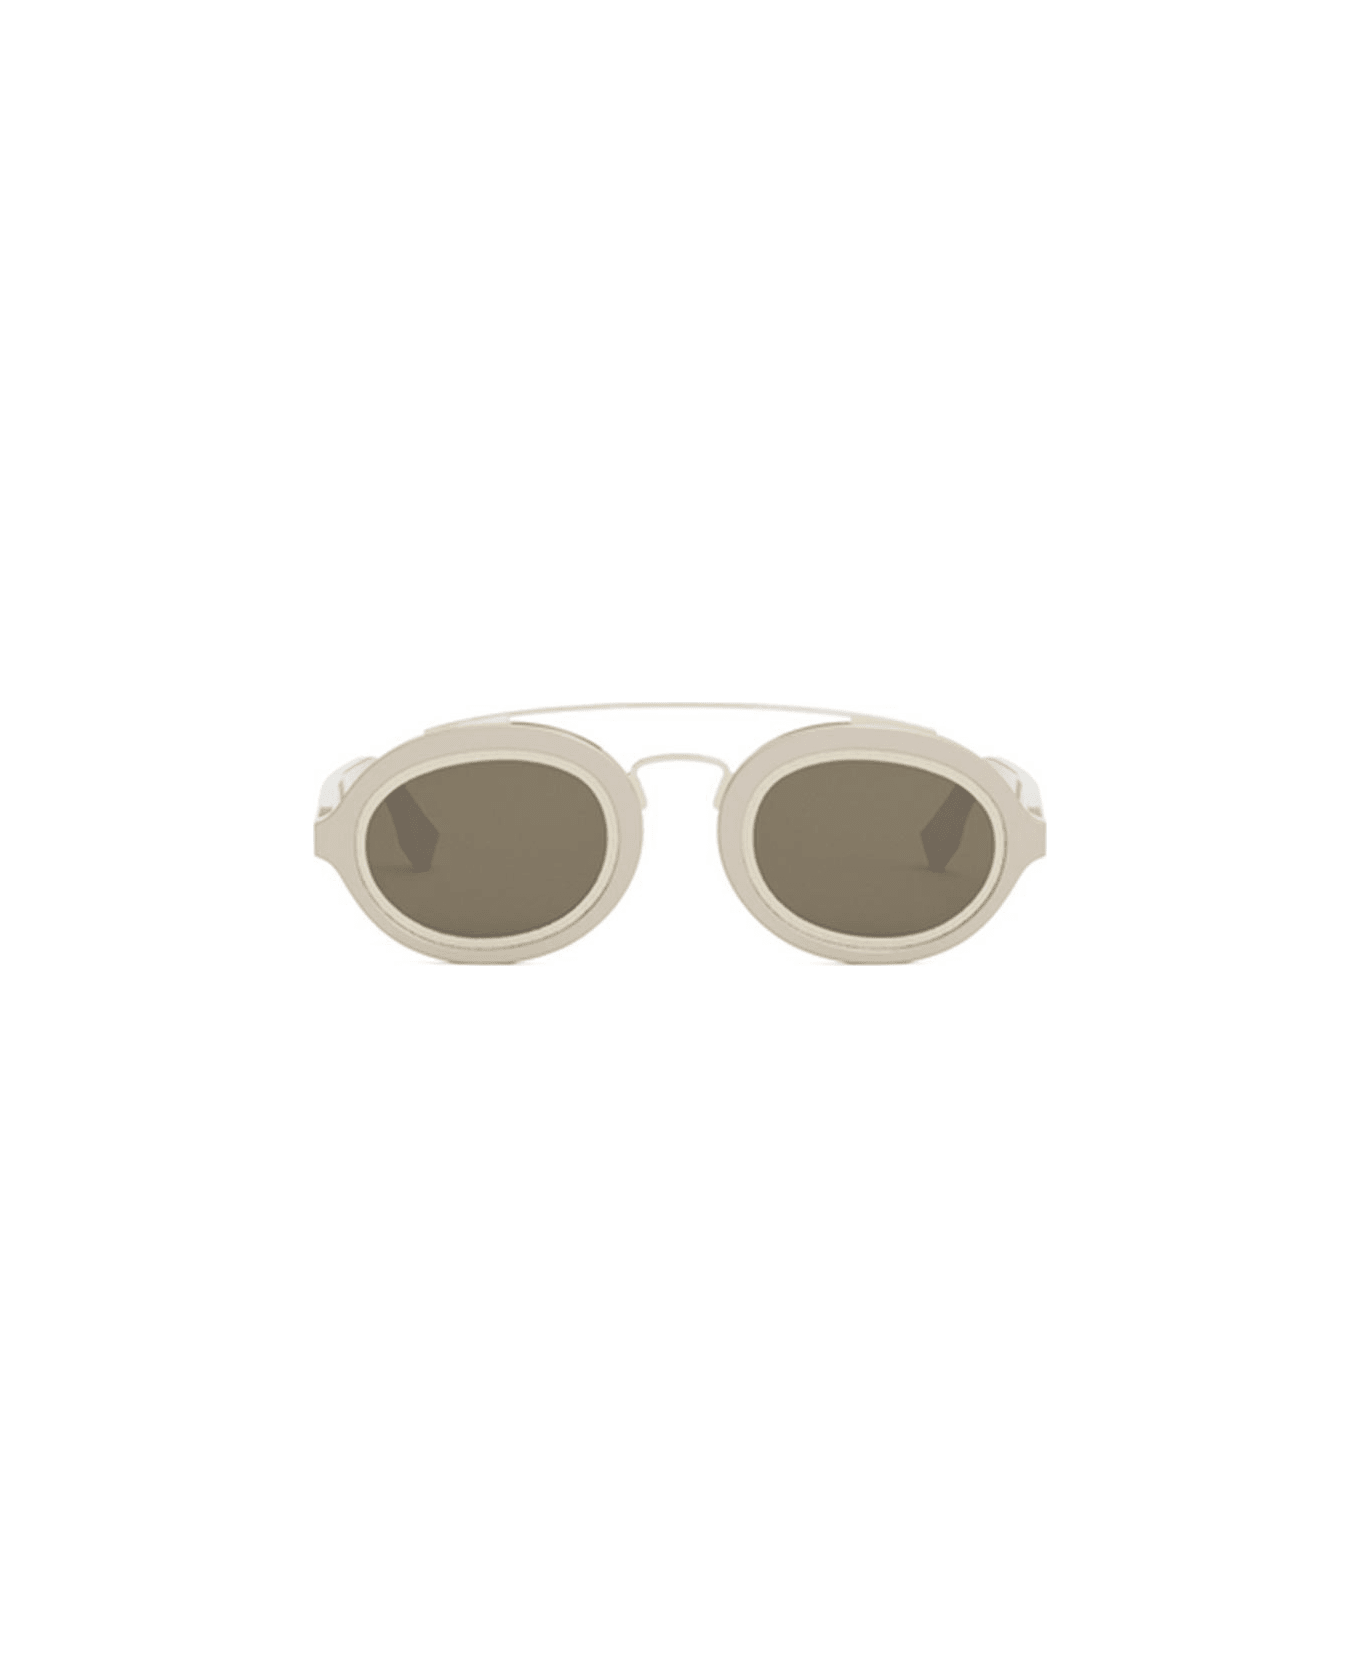 Fendi Eyewear Sunglasses Linda - Avorio/Marrone